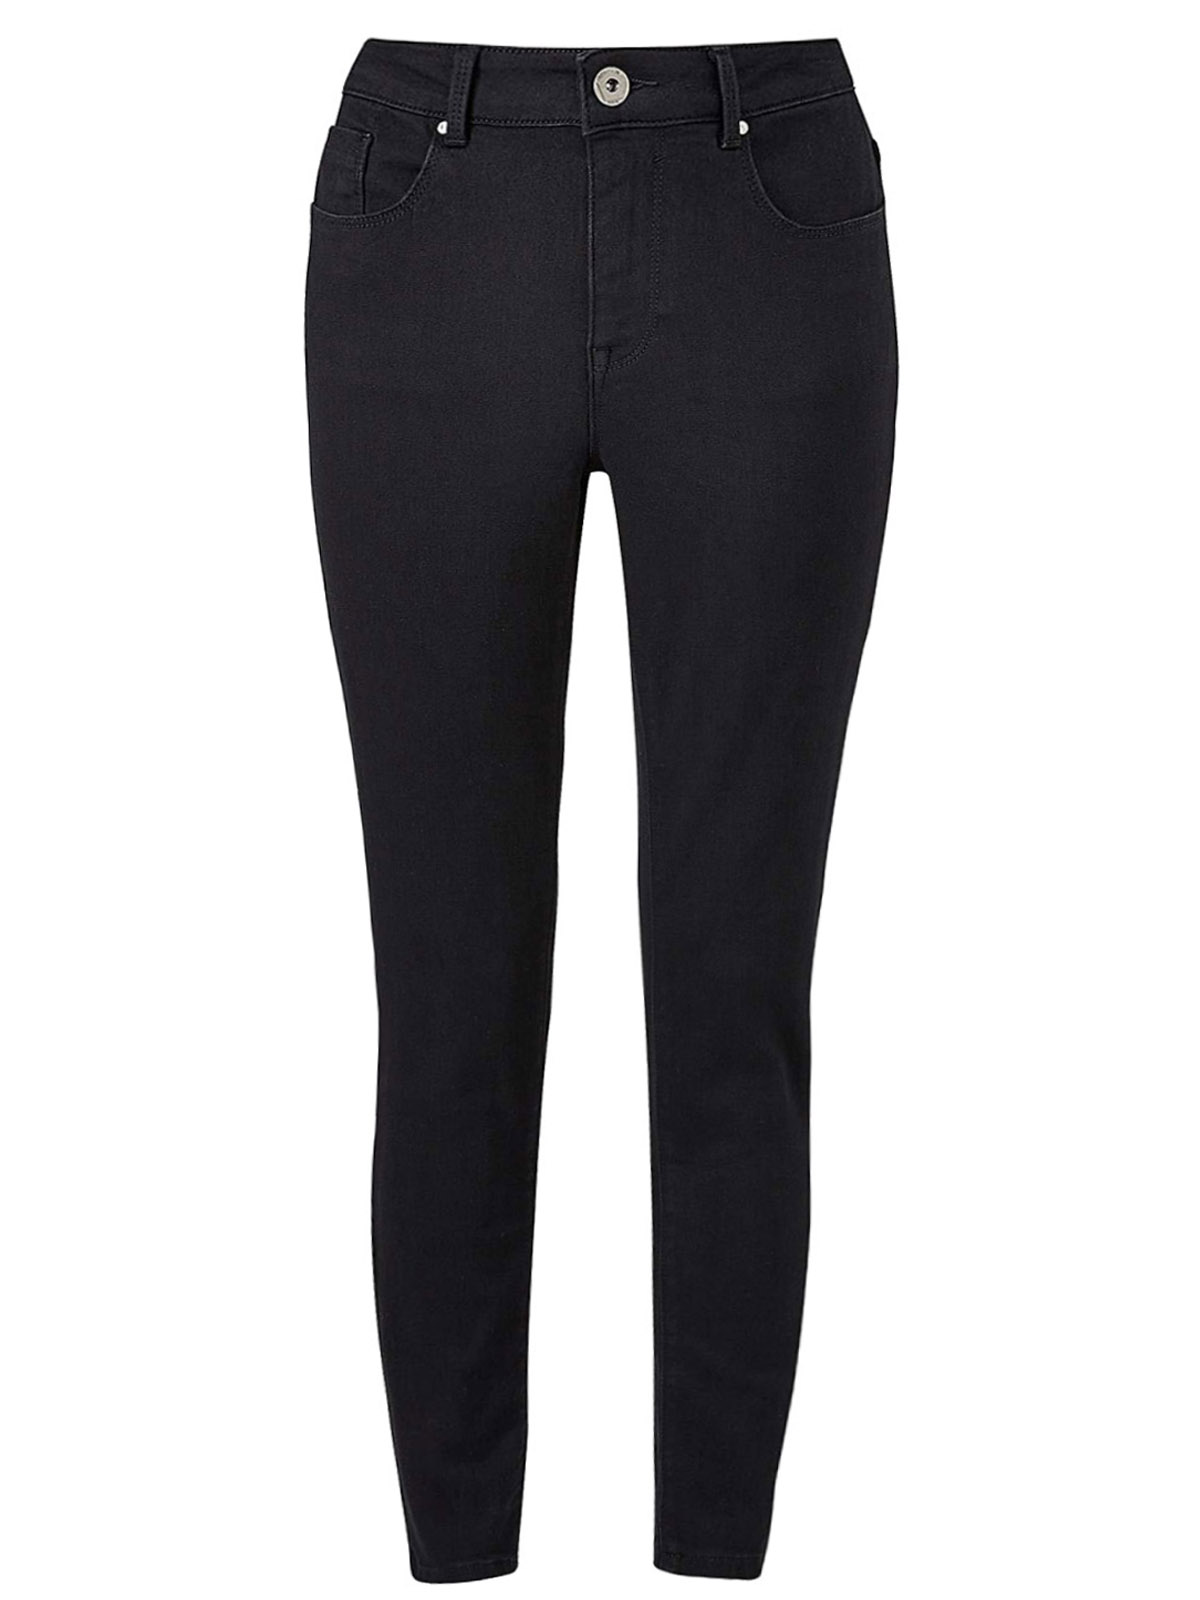 BLACK Chloe Skinny Jeans Long Length - Plus Size 30 to 32